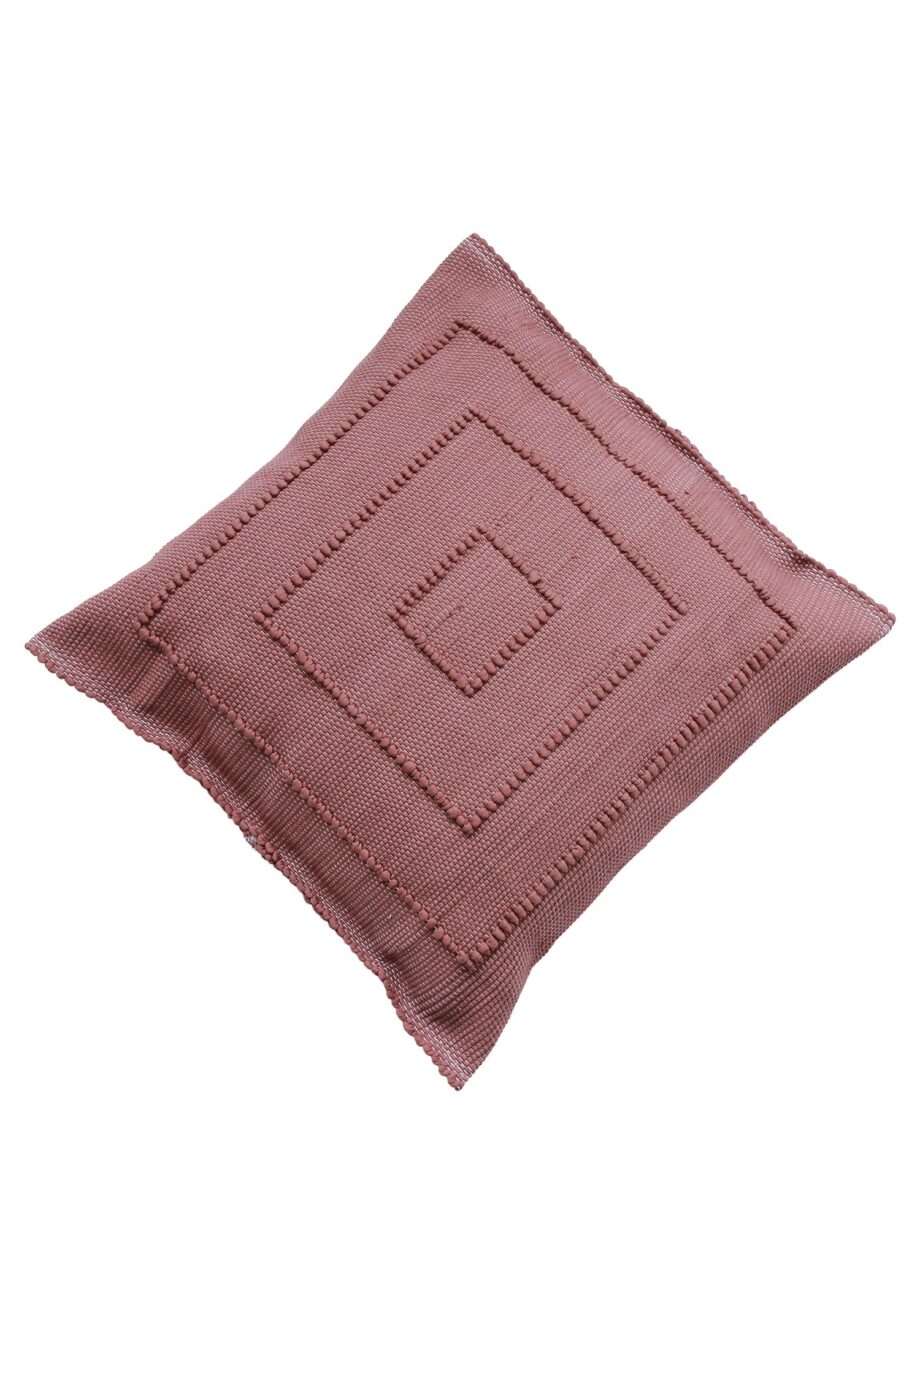 quadro marsala rose woven cotton pillowcase medium_front